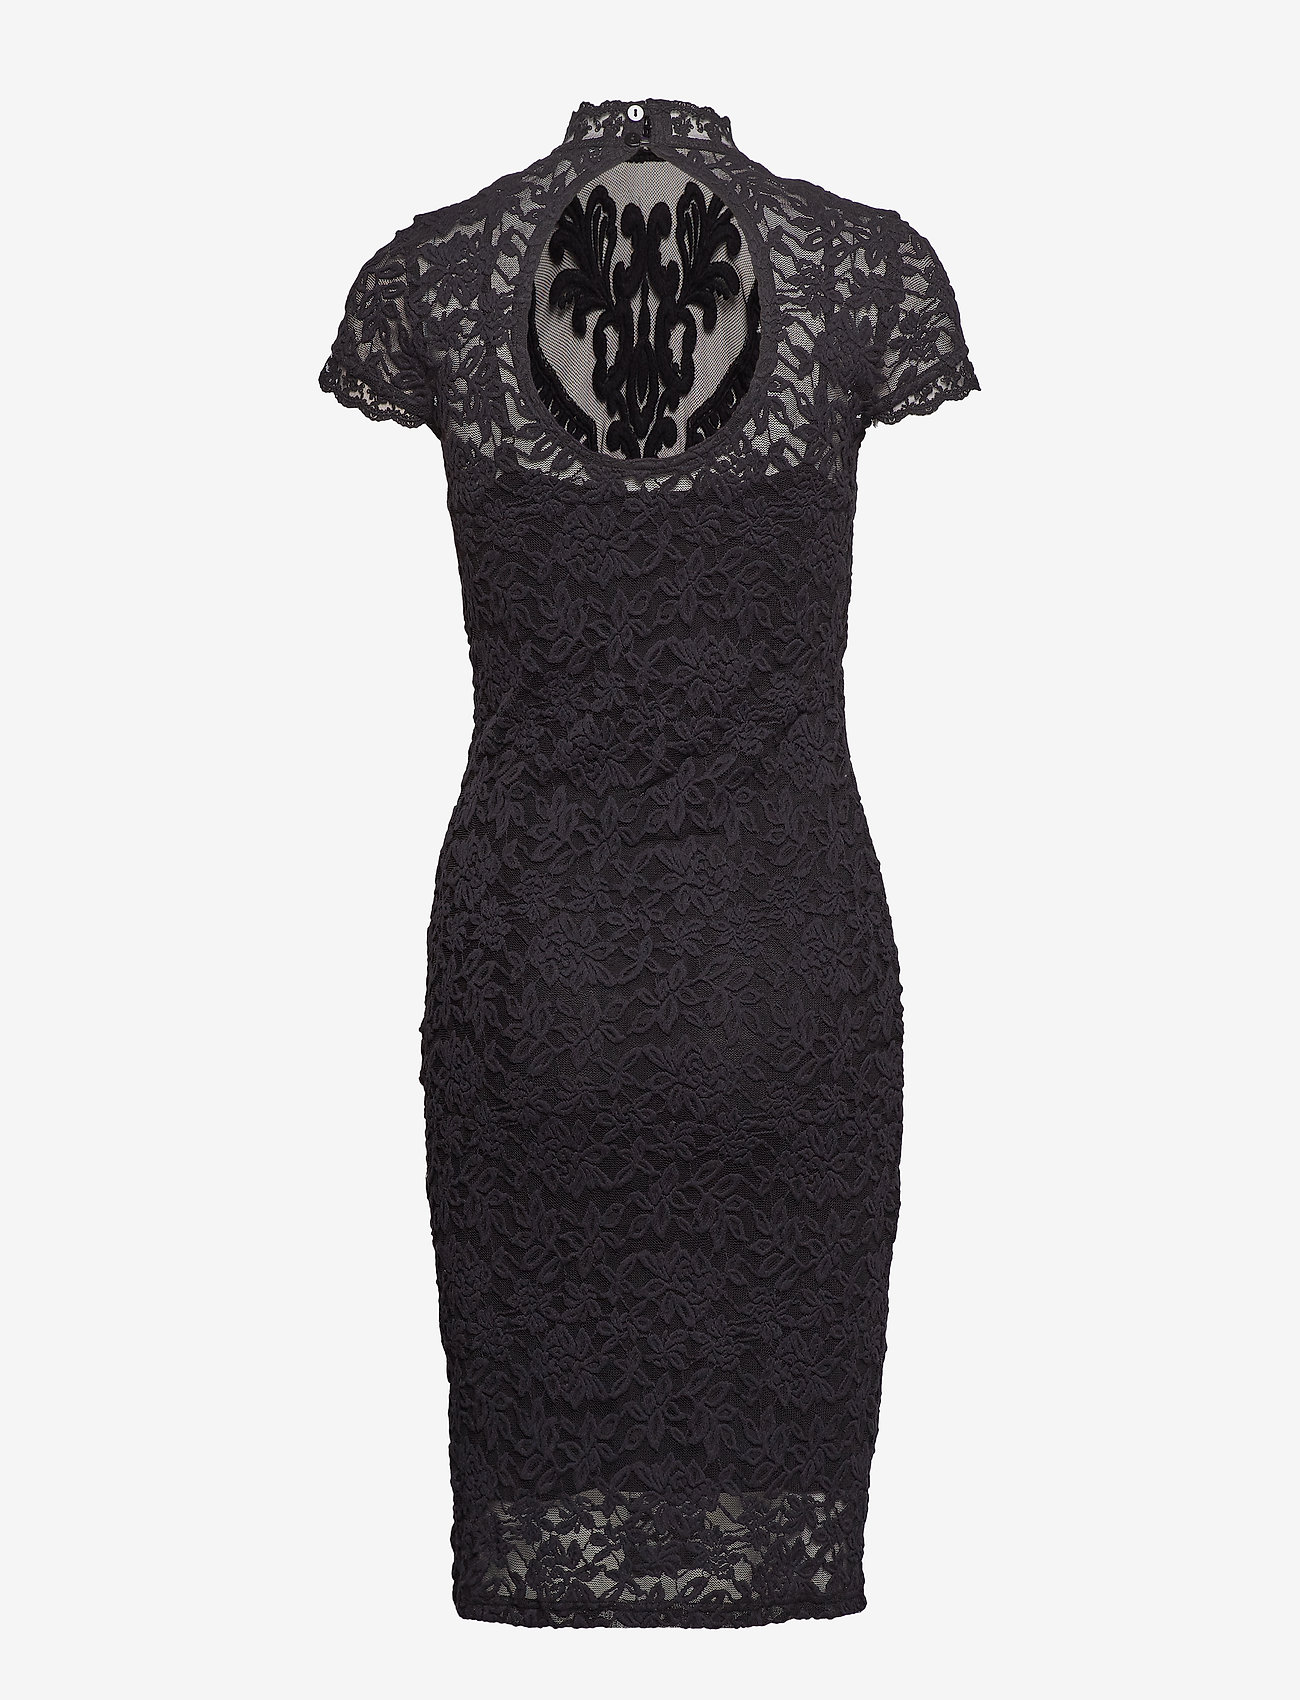 Rosemunde - Dress - aptemtos suknelės - black - 1